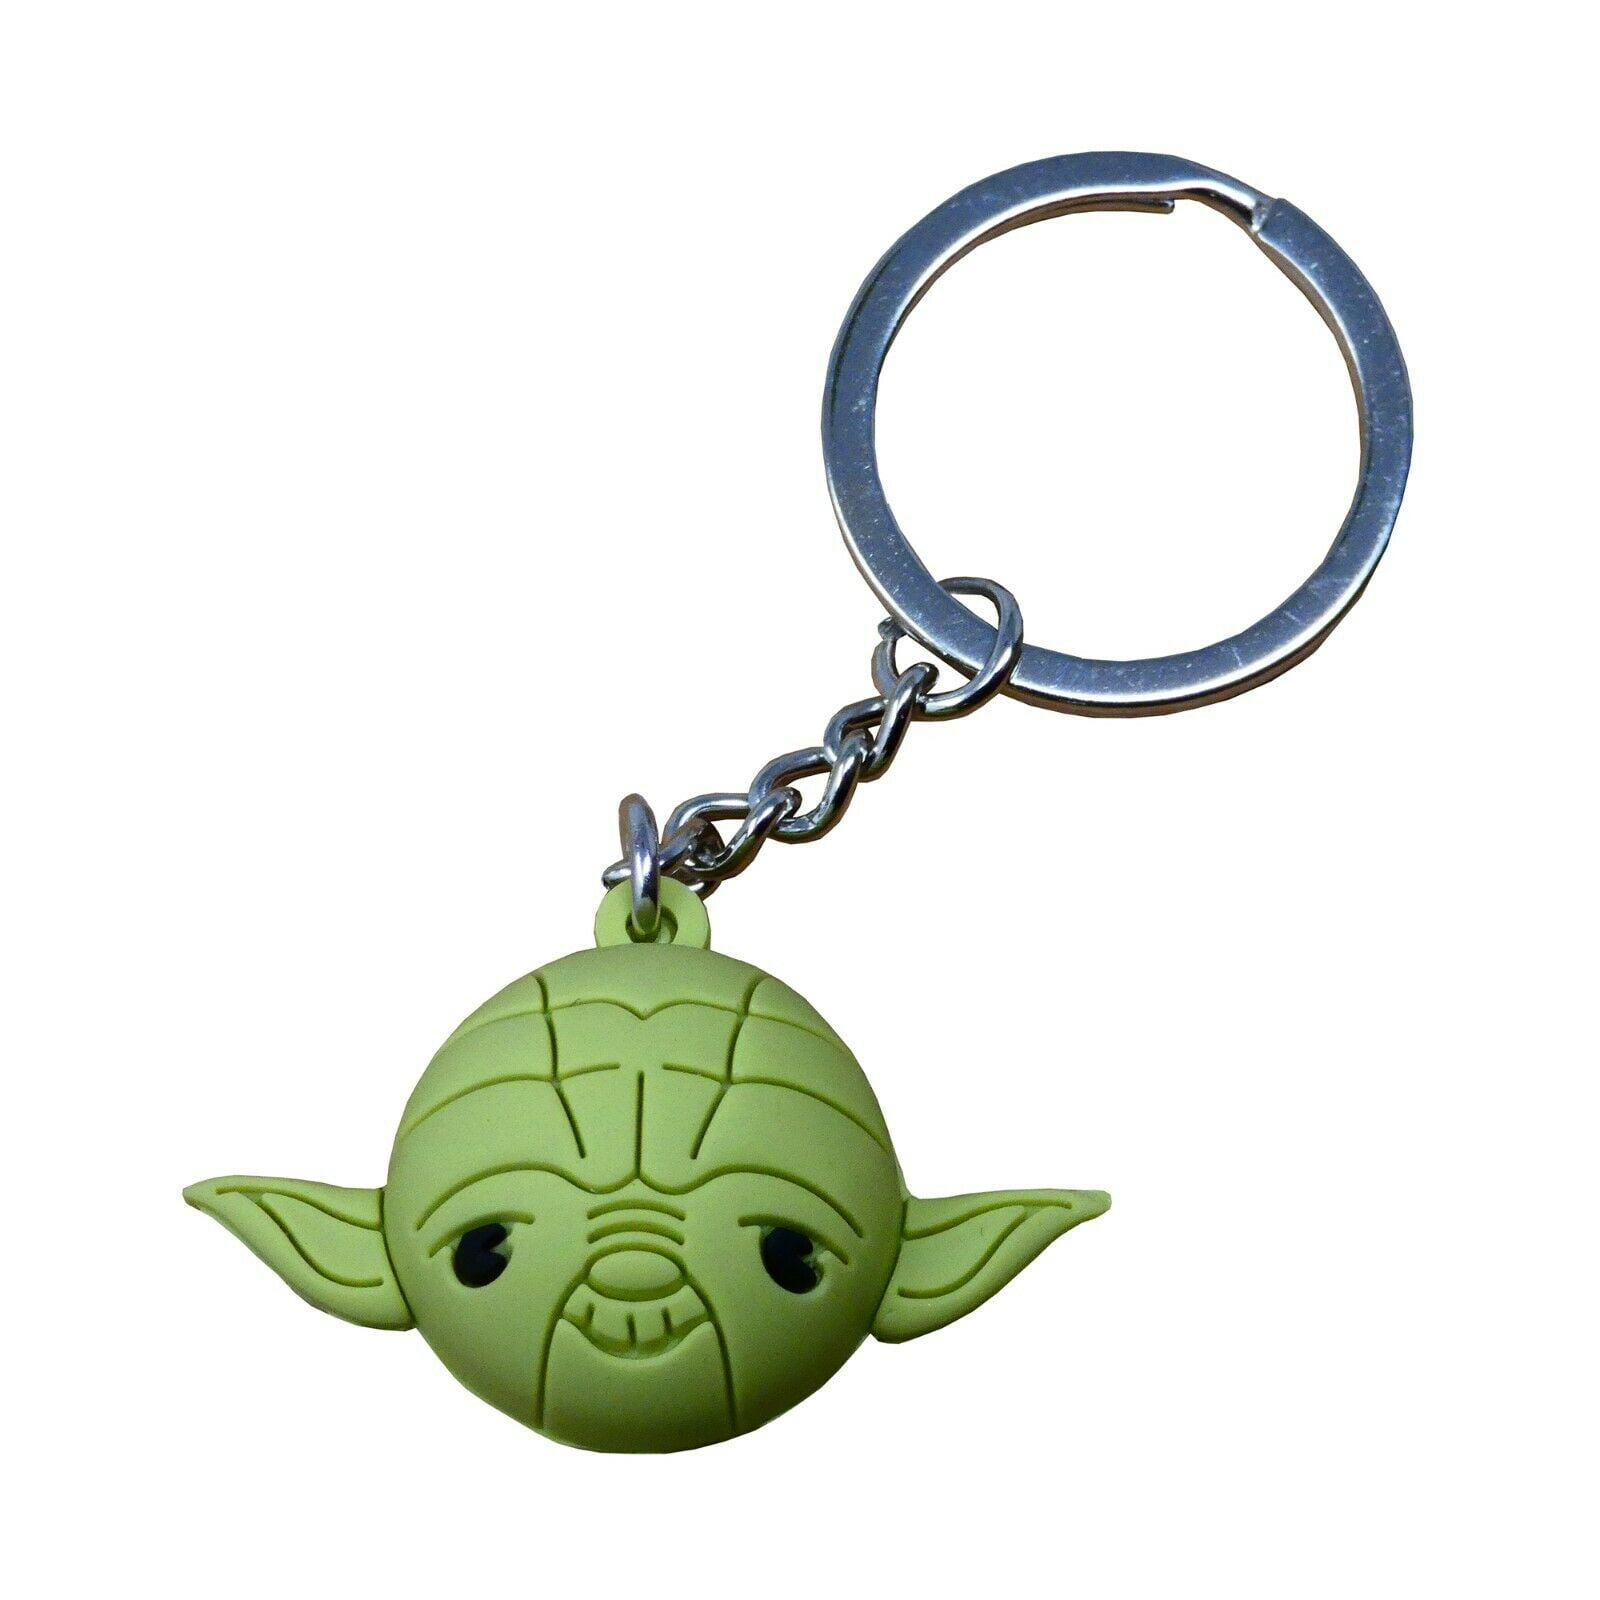 Star Wars Metal Keychain Keyrings Darth Vader Yoda Clone Trooper Collection Gift 